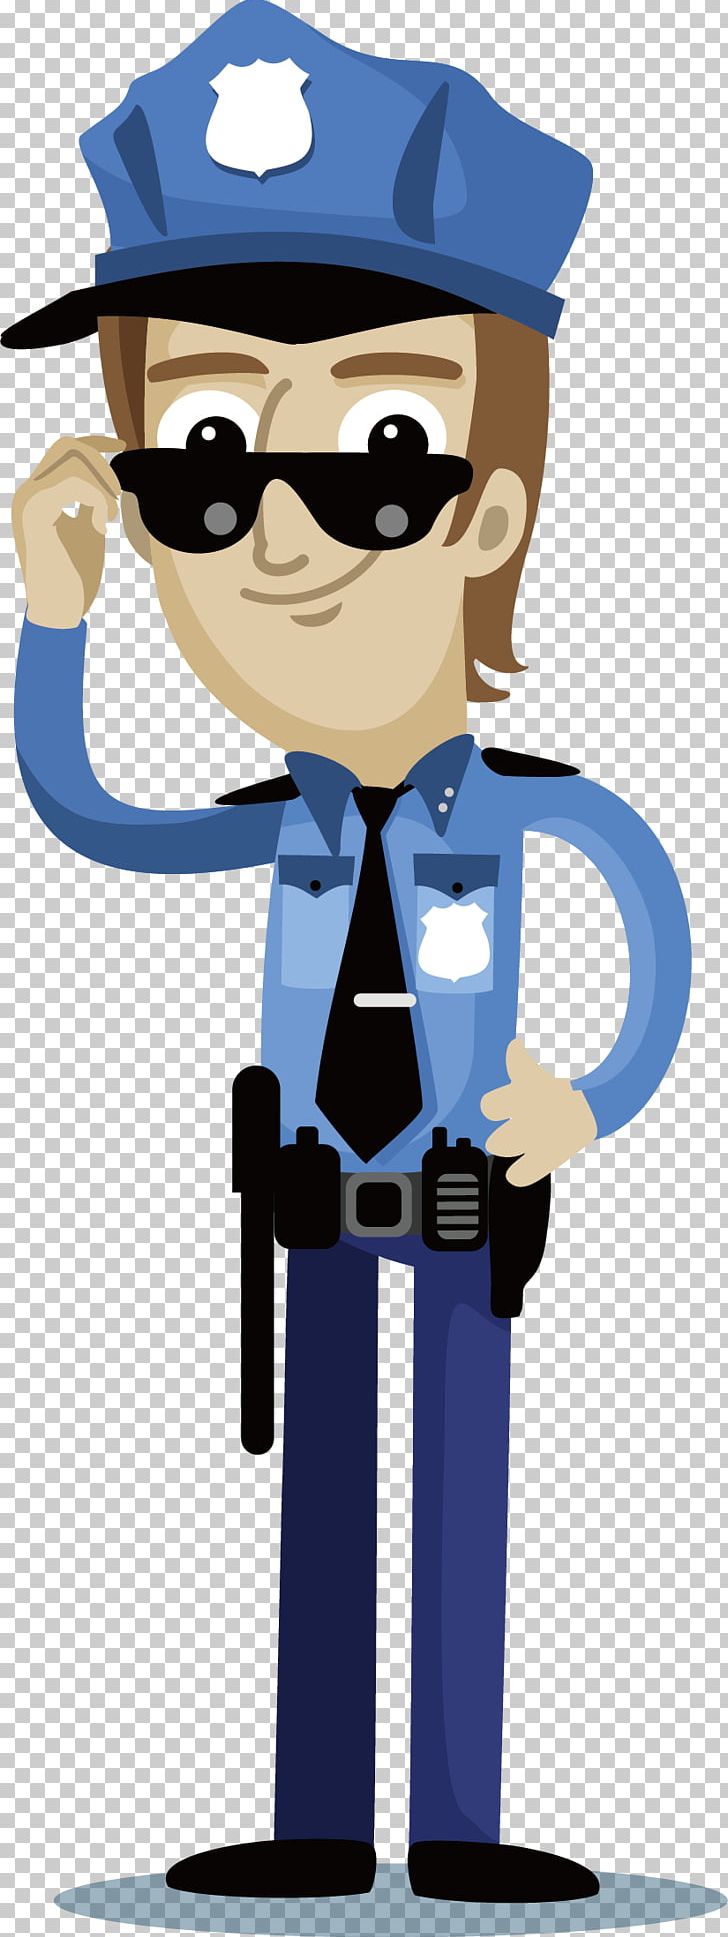 Police Officer Cartoon PNG, Clipart, Blue Sunglasses, Crime, Element, Encapsulated Postscript, Eyewear Free PNG Download